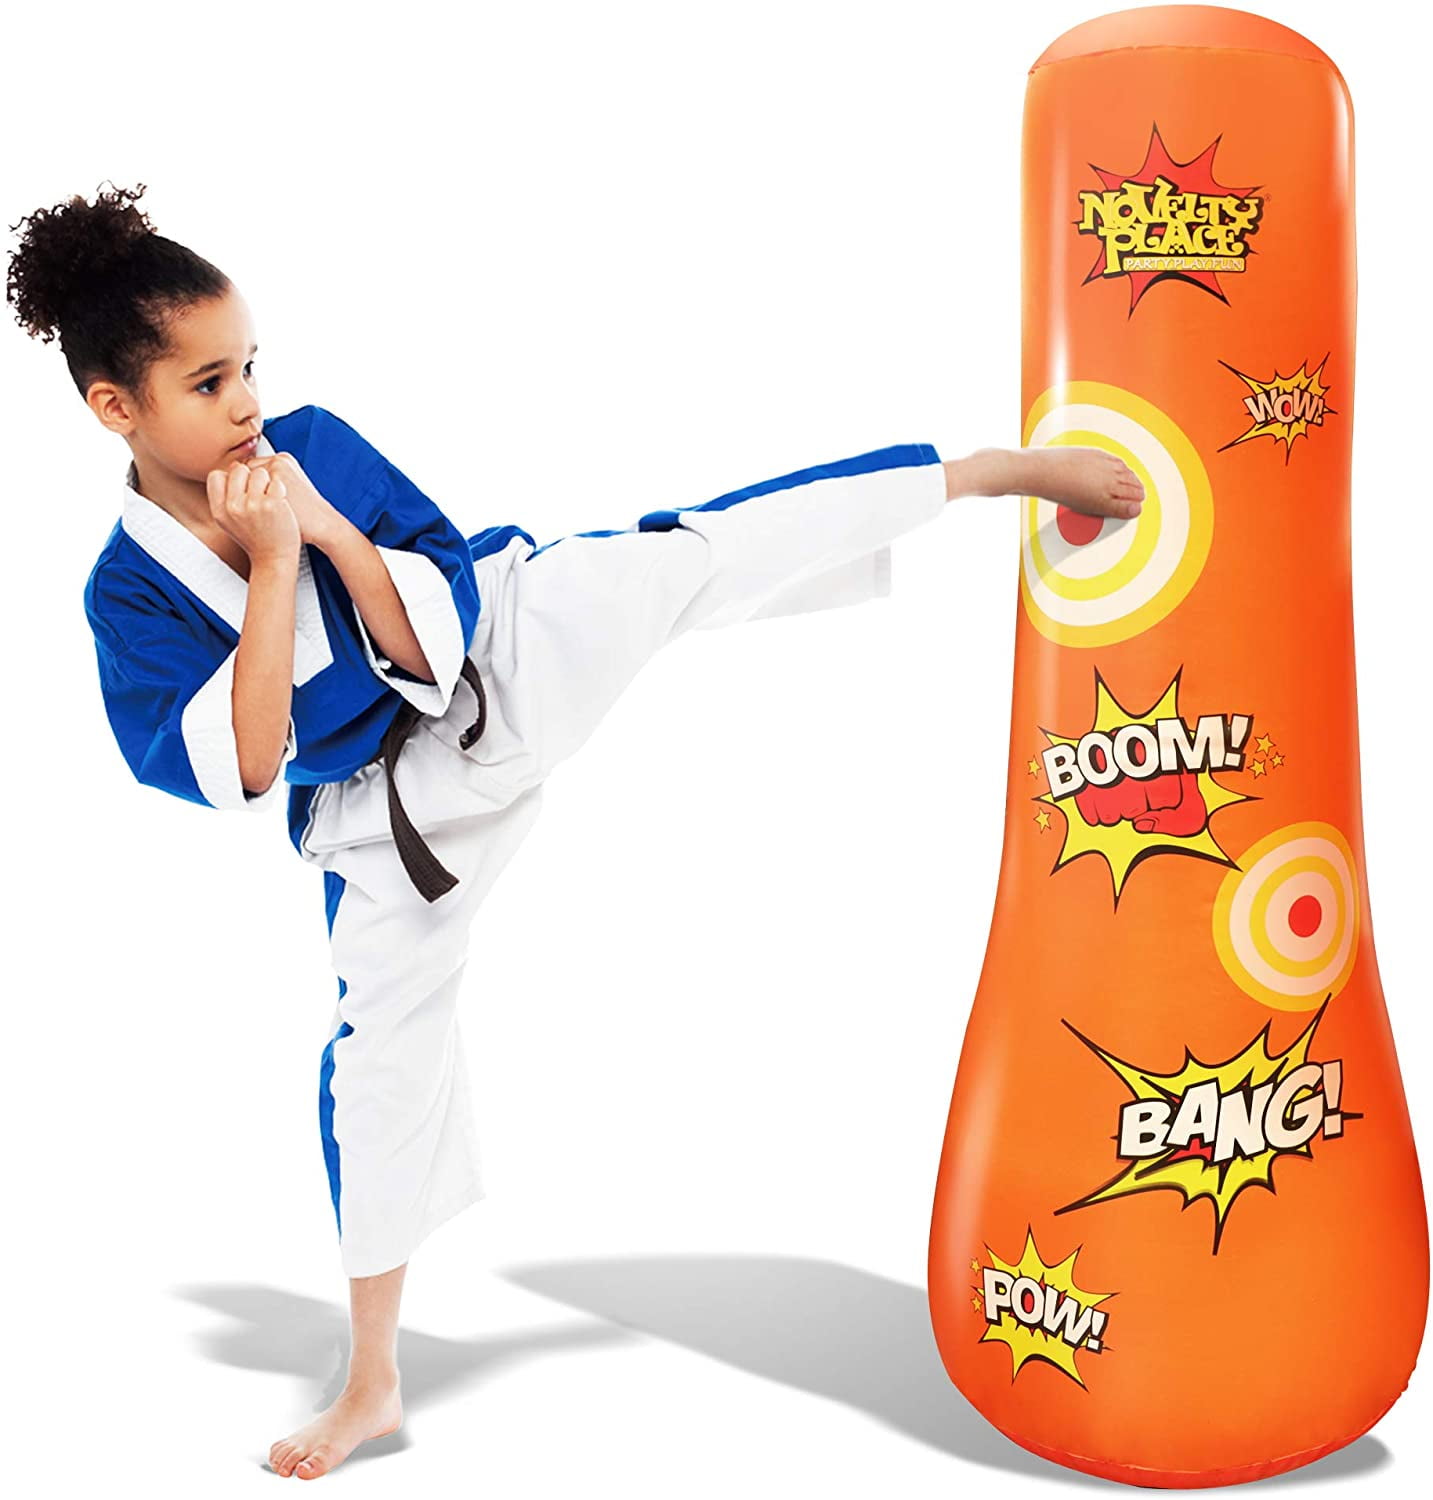 Powgym Pack Of 2 Black Taekwondo Durable Kick Pads Targets For Kickboxing Traini 